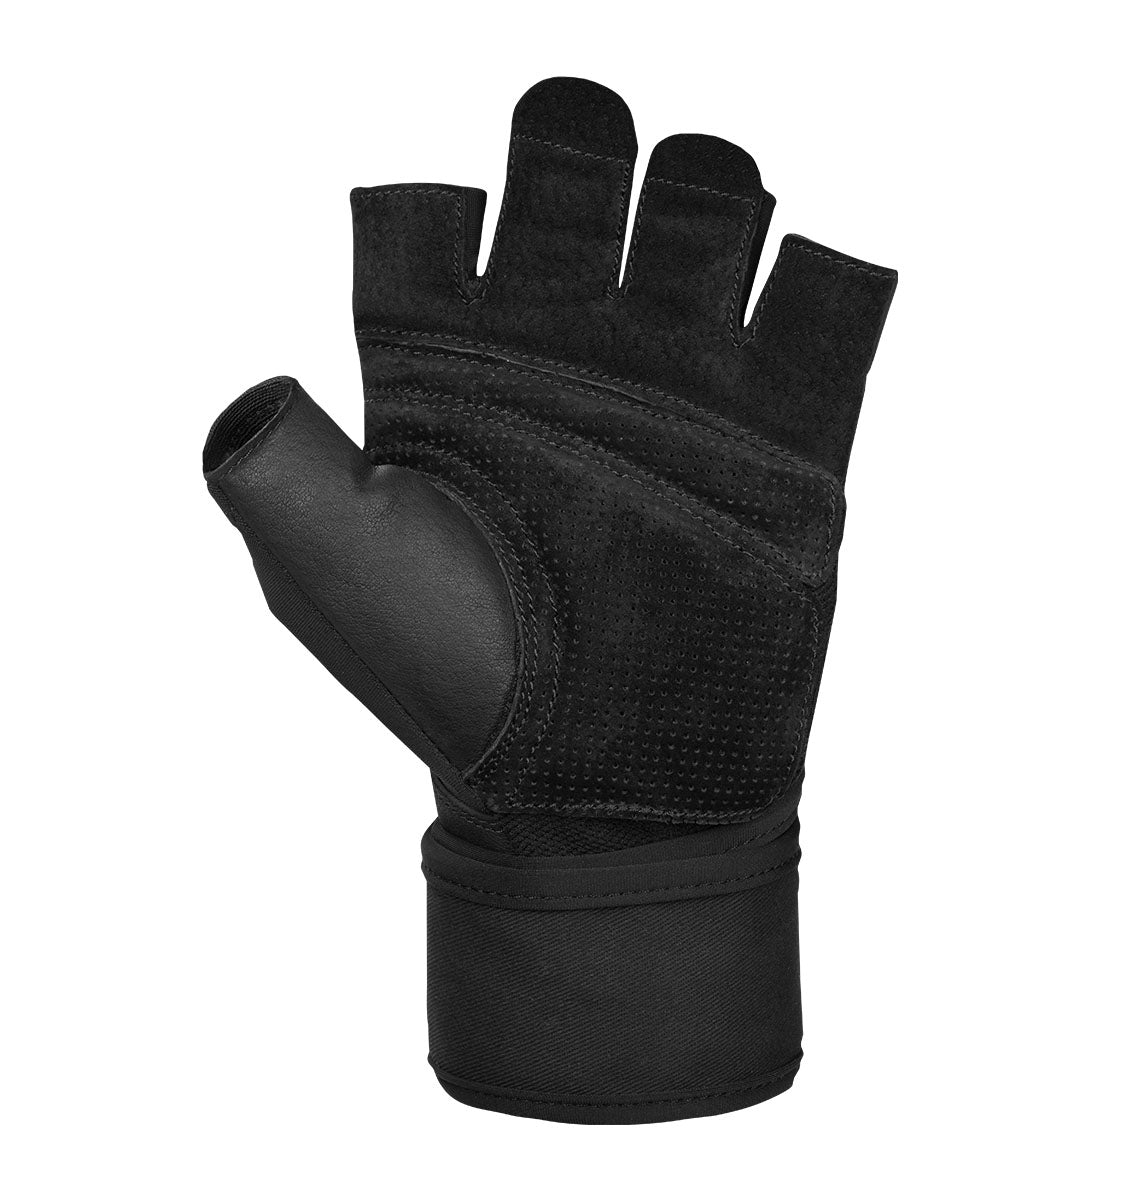 Harbinger Women's Pro Wrist Wrap Weight Lifting Gloves 2.0 - Black - 6